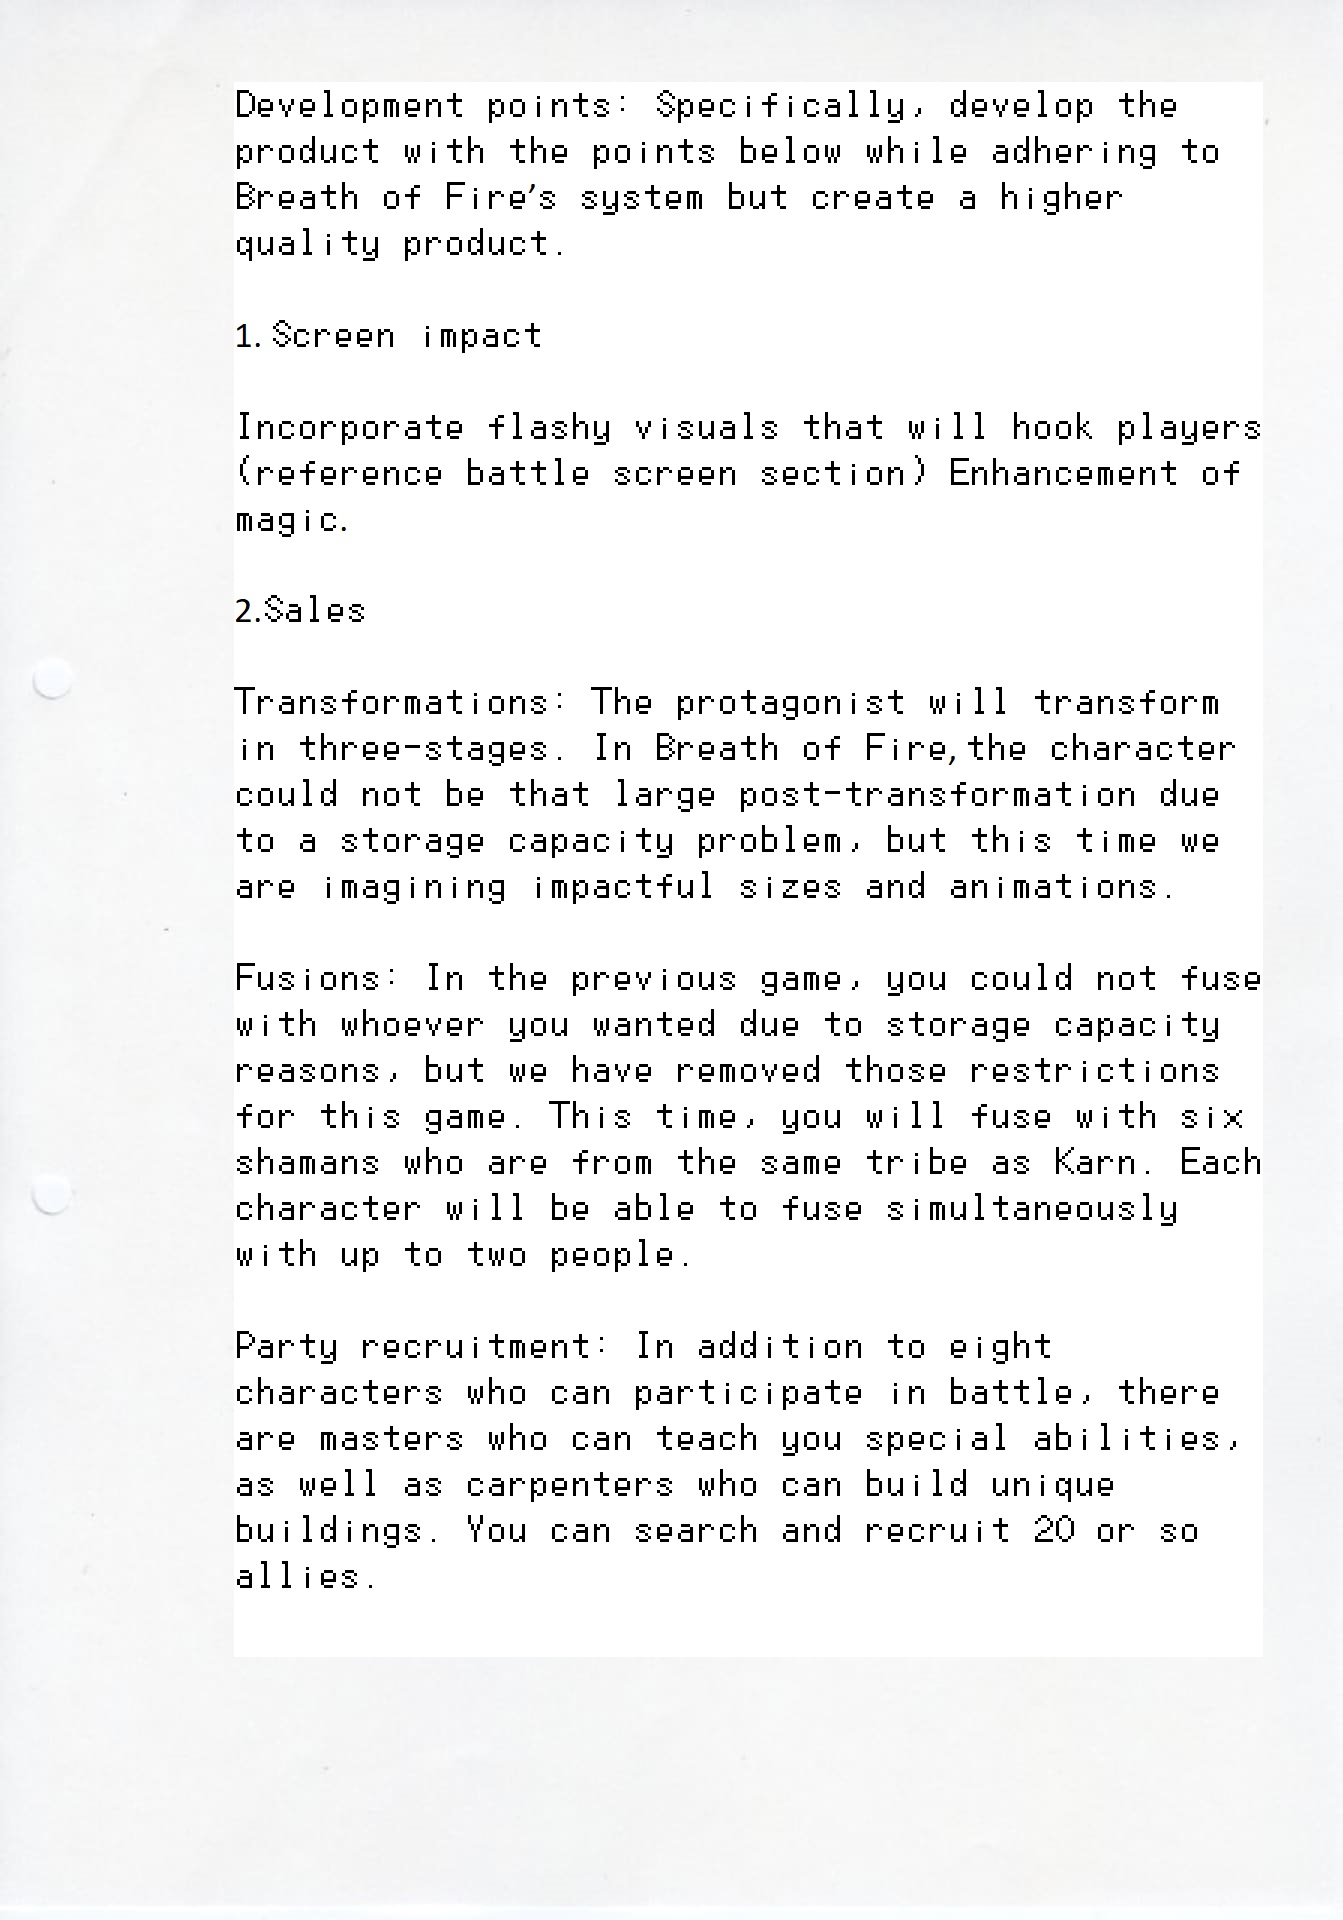 Breath of Fire 2 Design Doc Page 3 / English